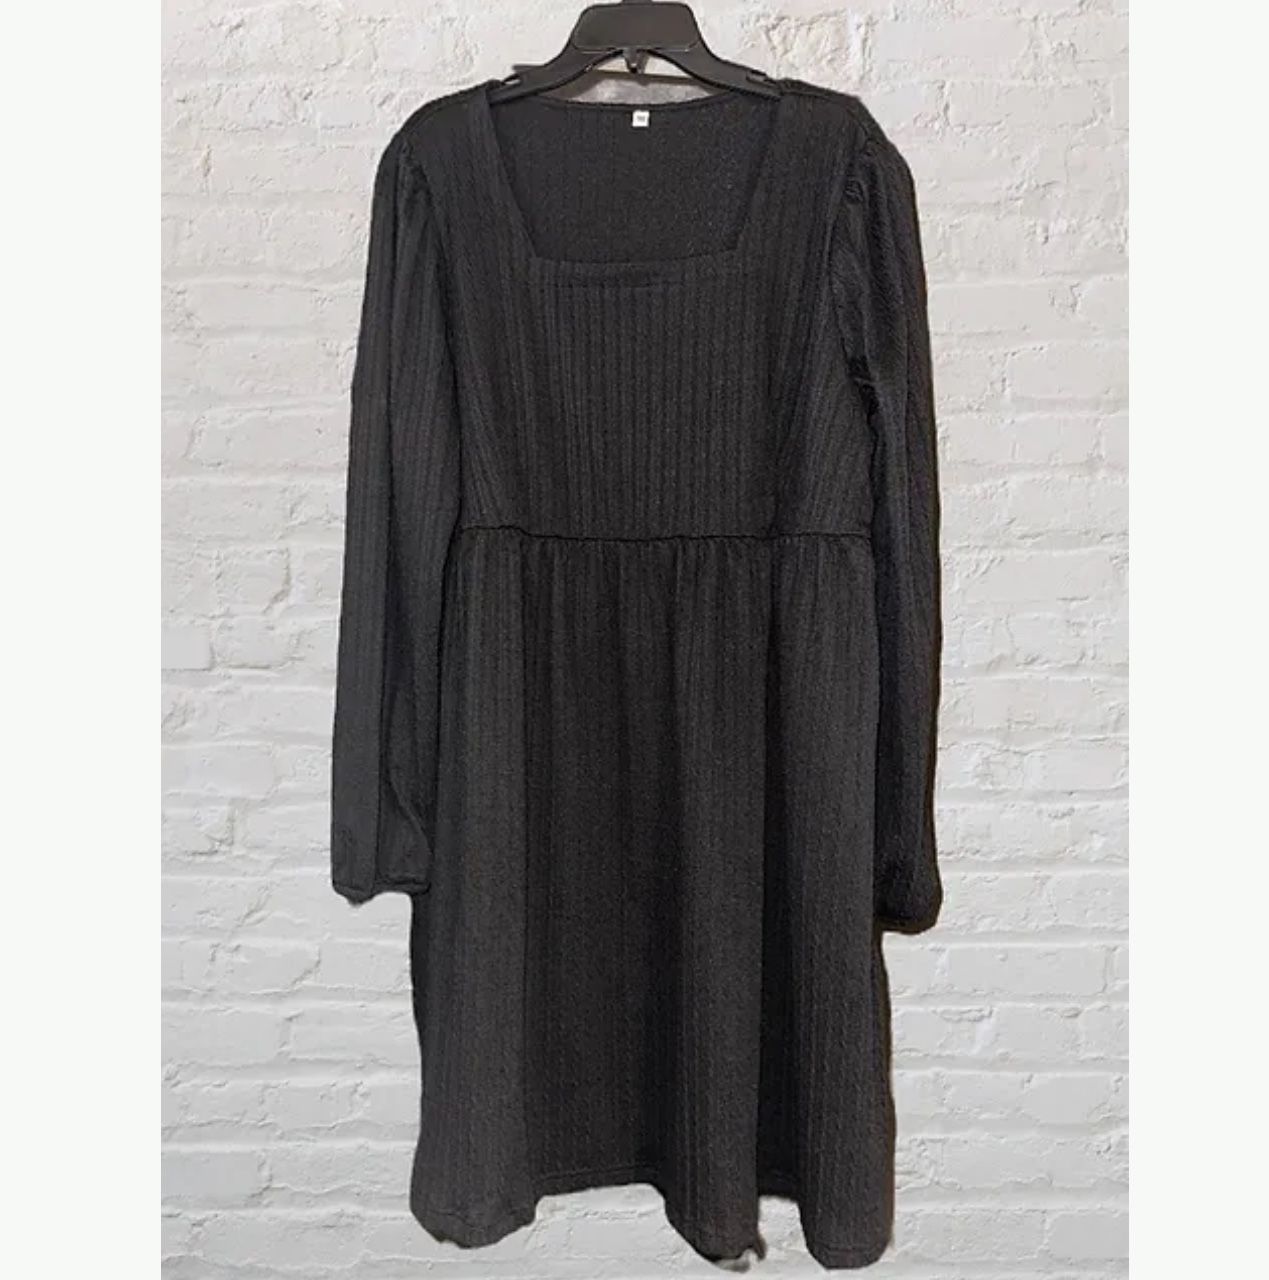 Brand New (Size 2XL) Women's Plus Size Black Ribbed Dress